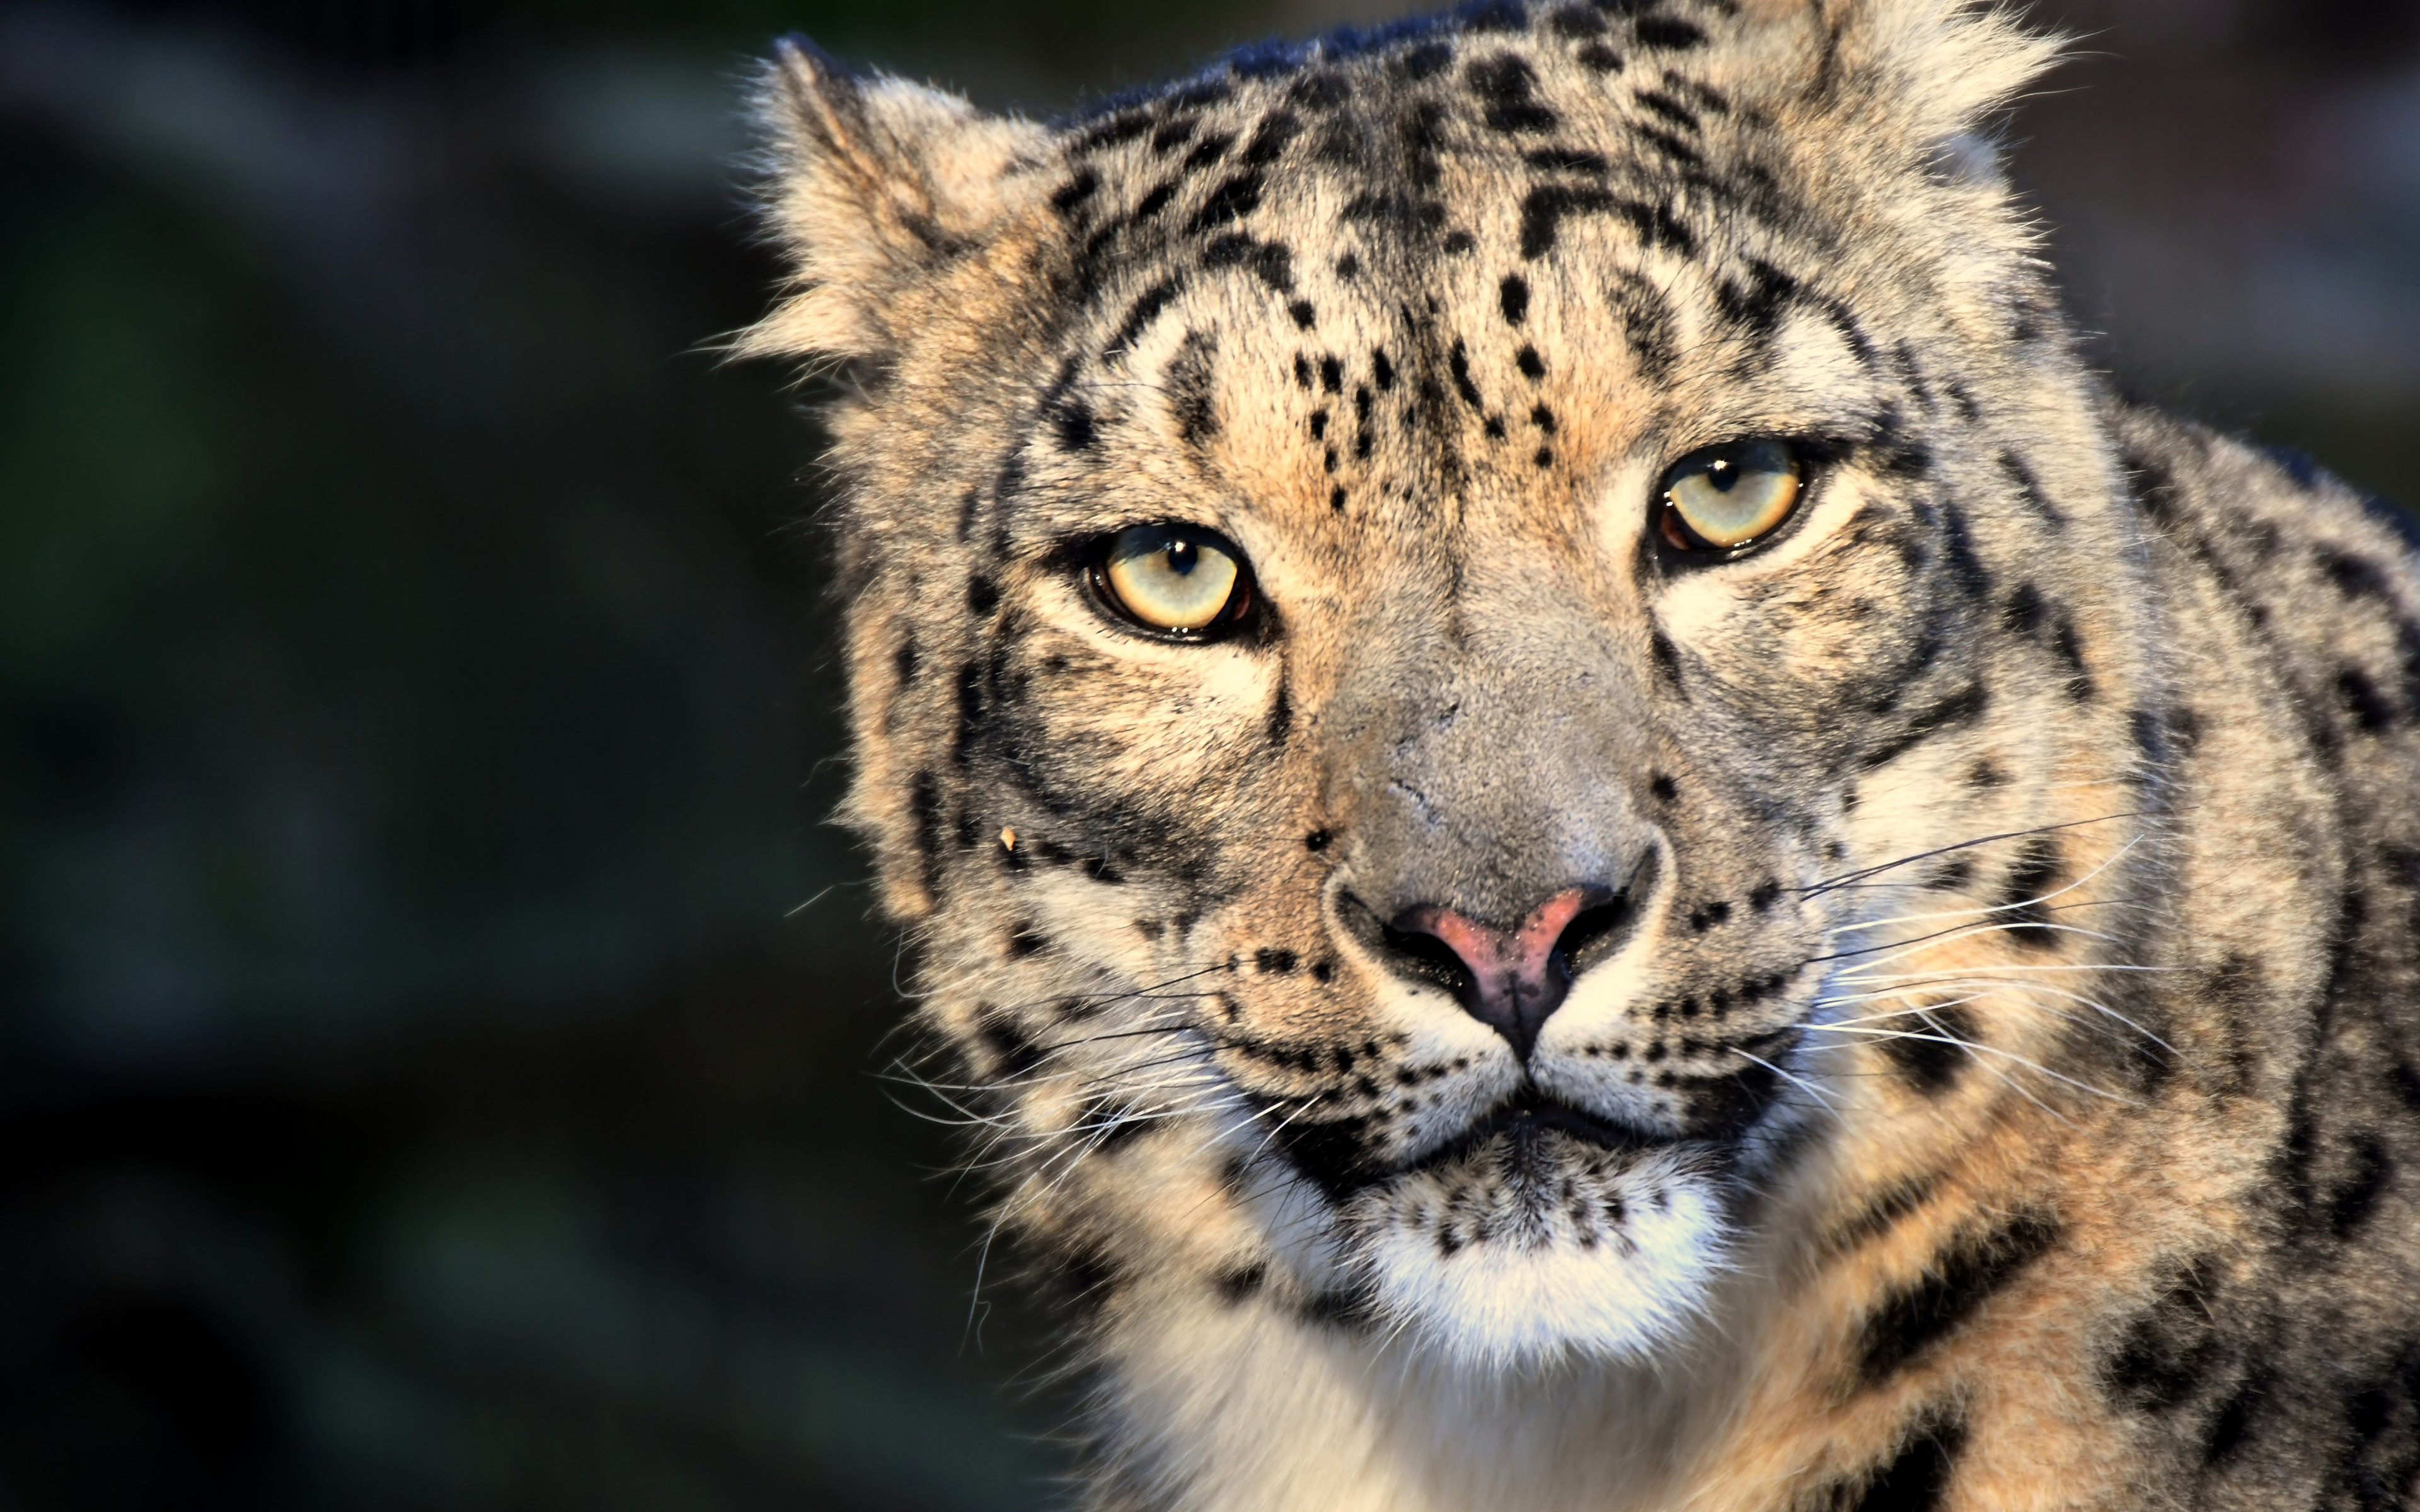 Download 3840x2400 Wallpaper Snow Leopard Animal, Predator, Wild Animals, 4  K, Ultra Hd 16:10, Widescreen, 3840x2400 Hd Image, Background, 9593